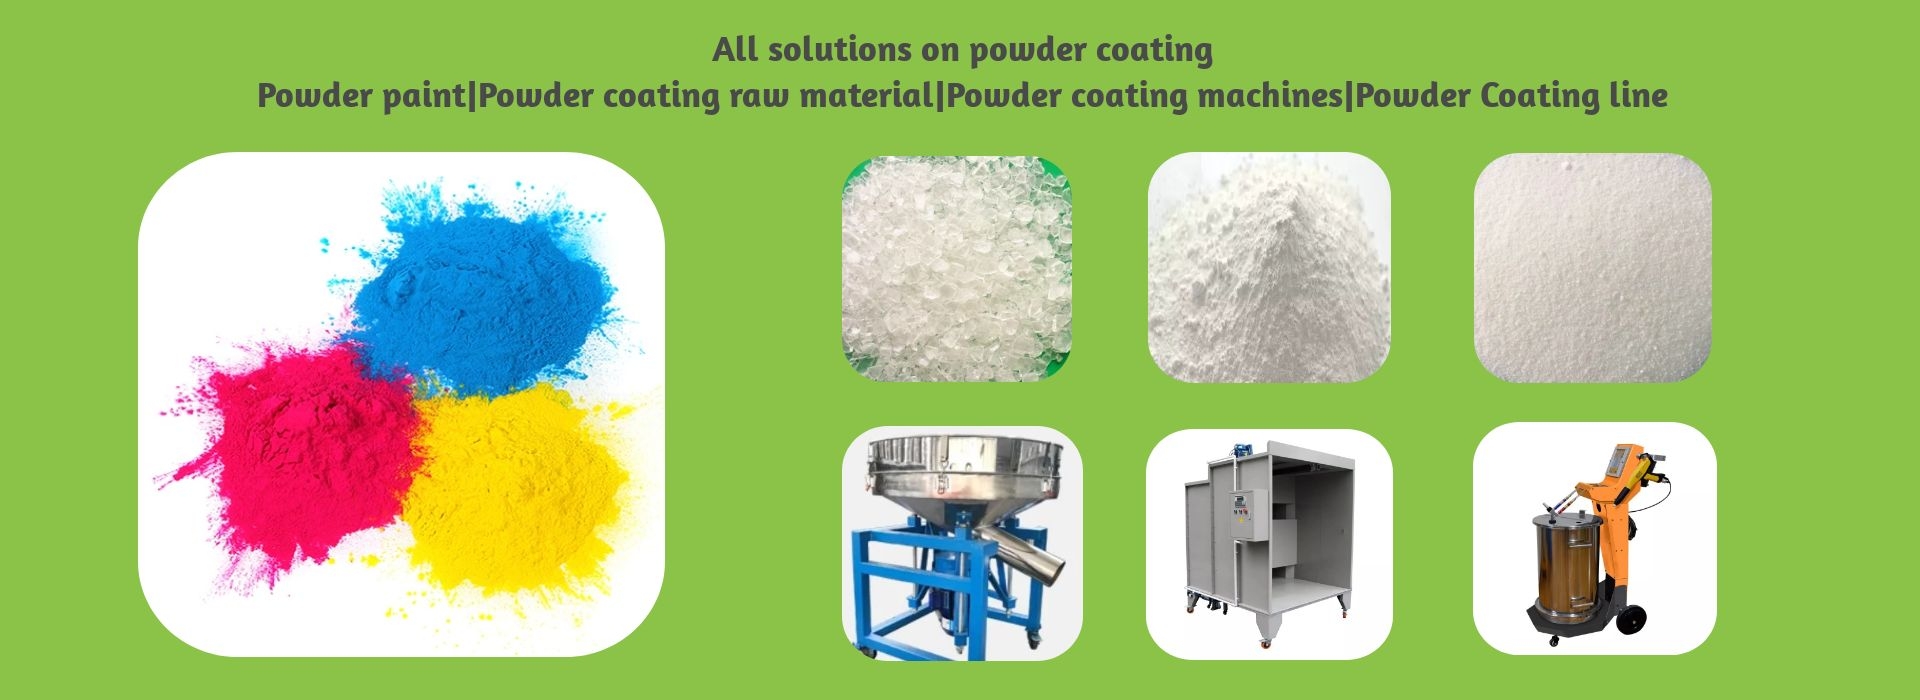 powder coating solution